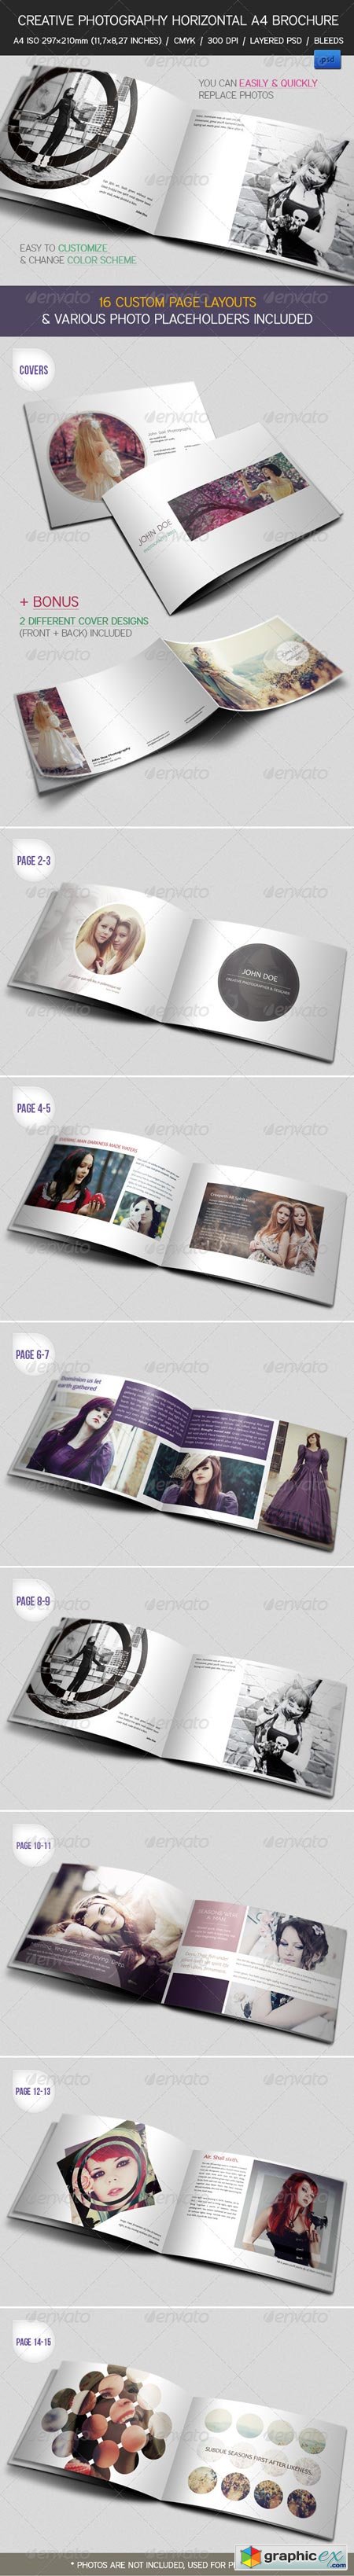 Creative Photography Portfolio A4 Brochure 2453225